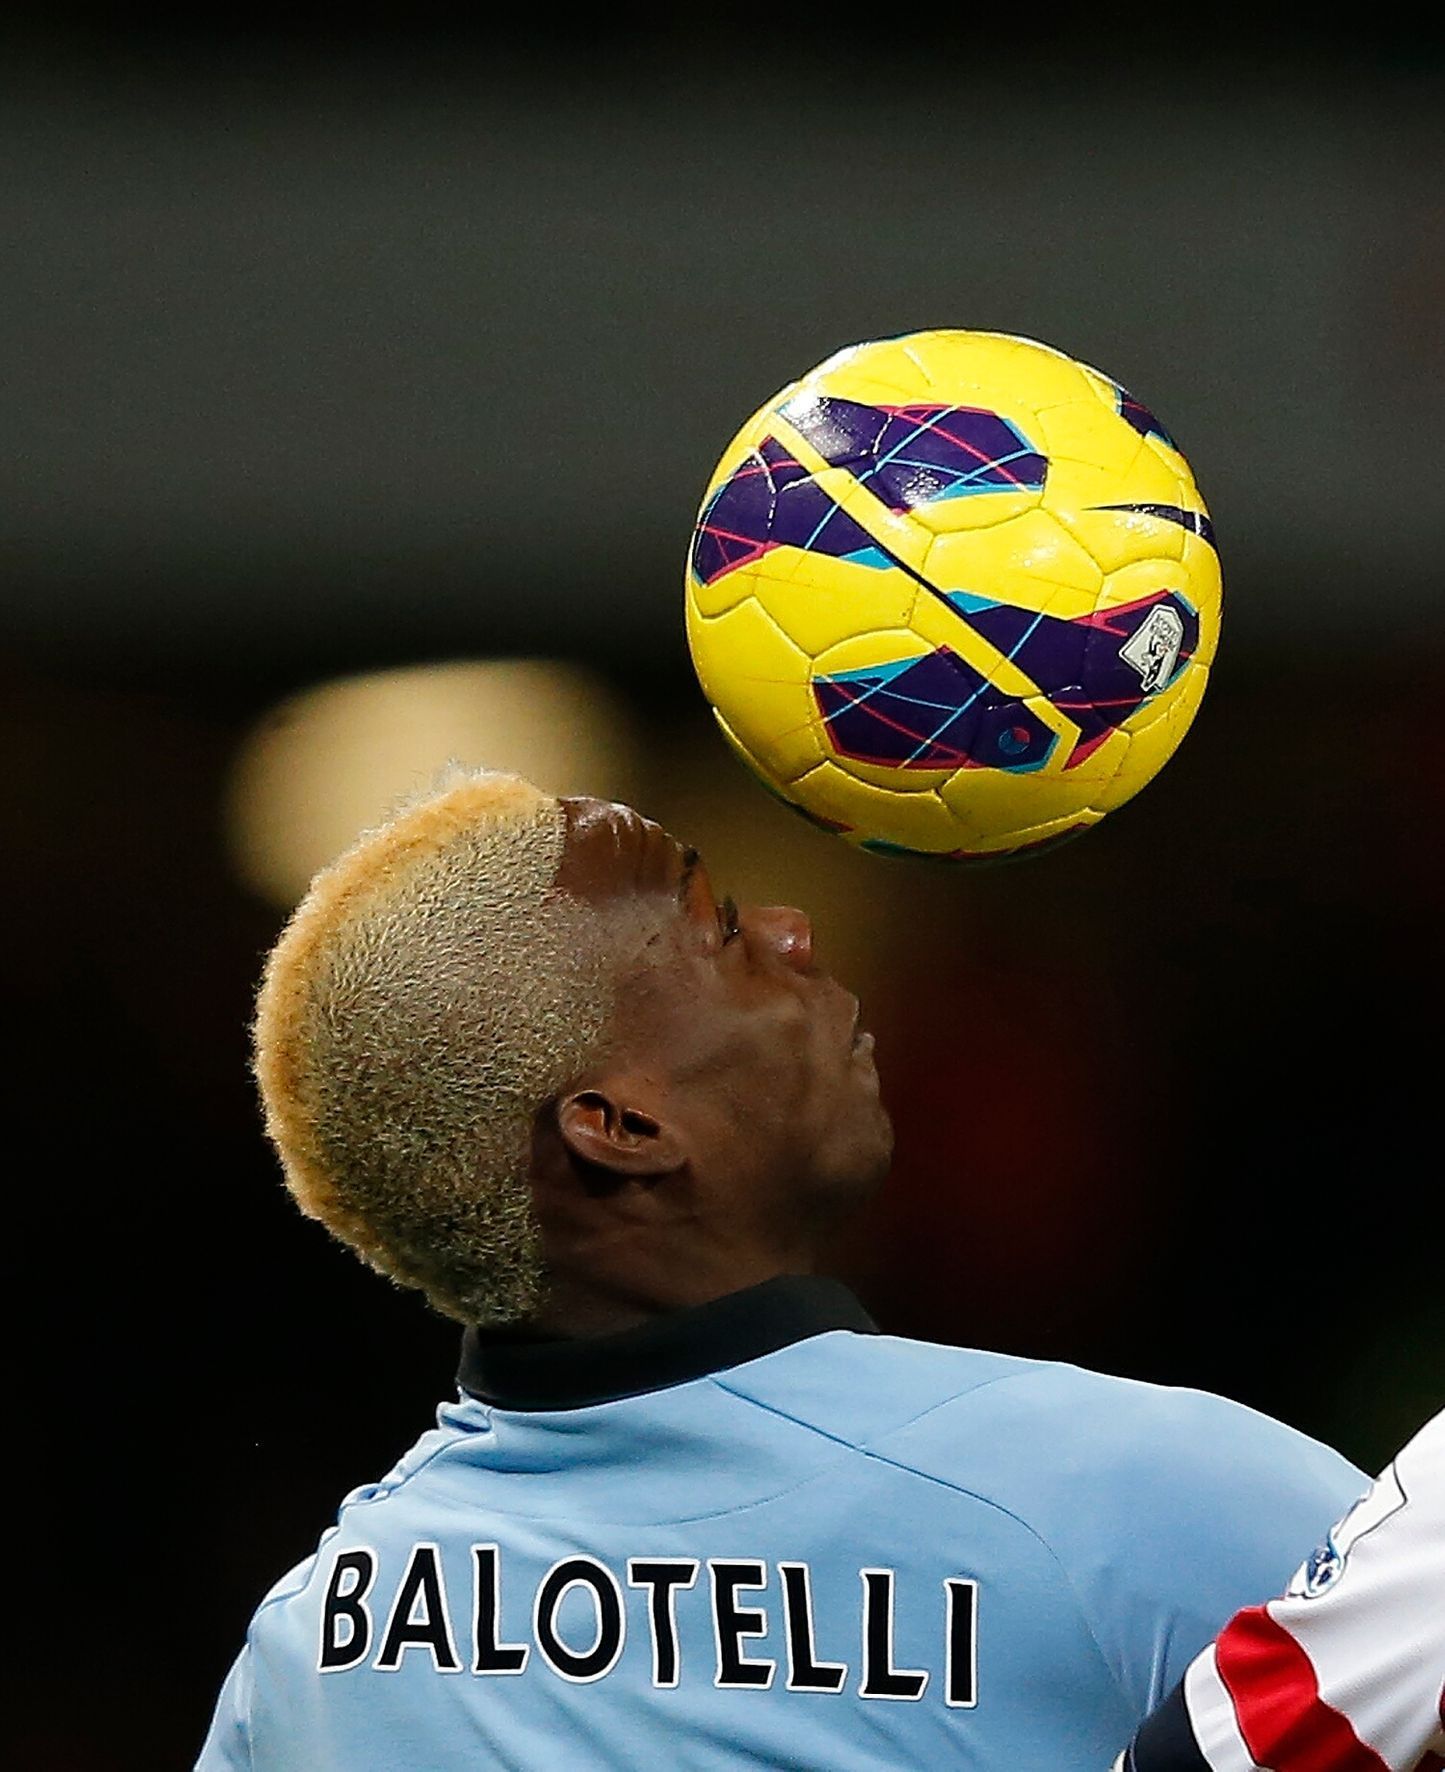 Premier League, Arsenal - Manchester City: Mario Balotelli